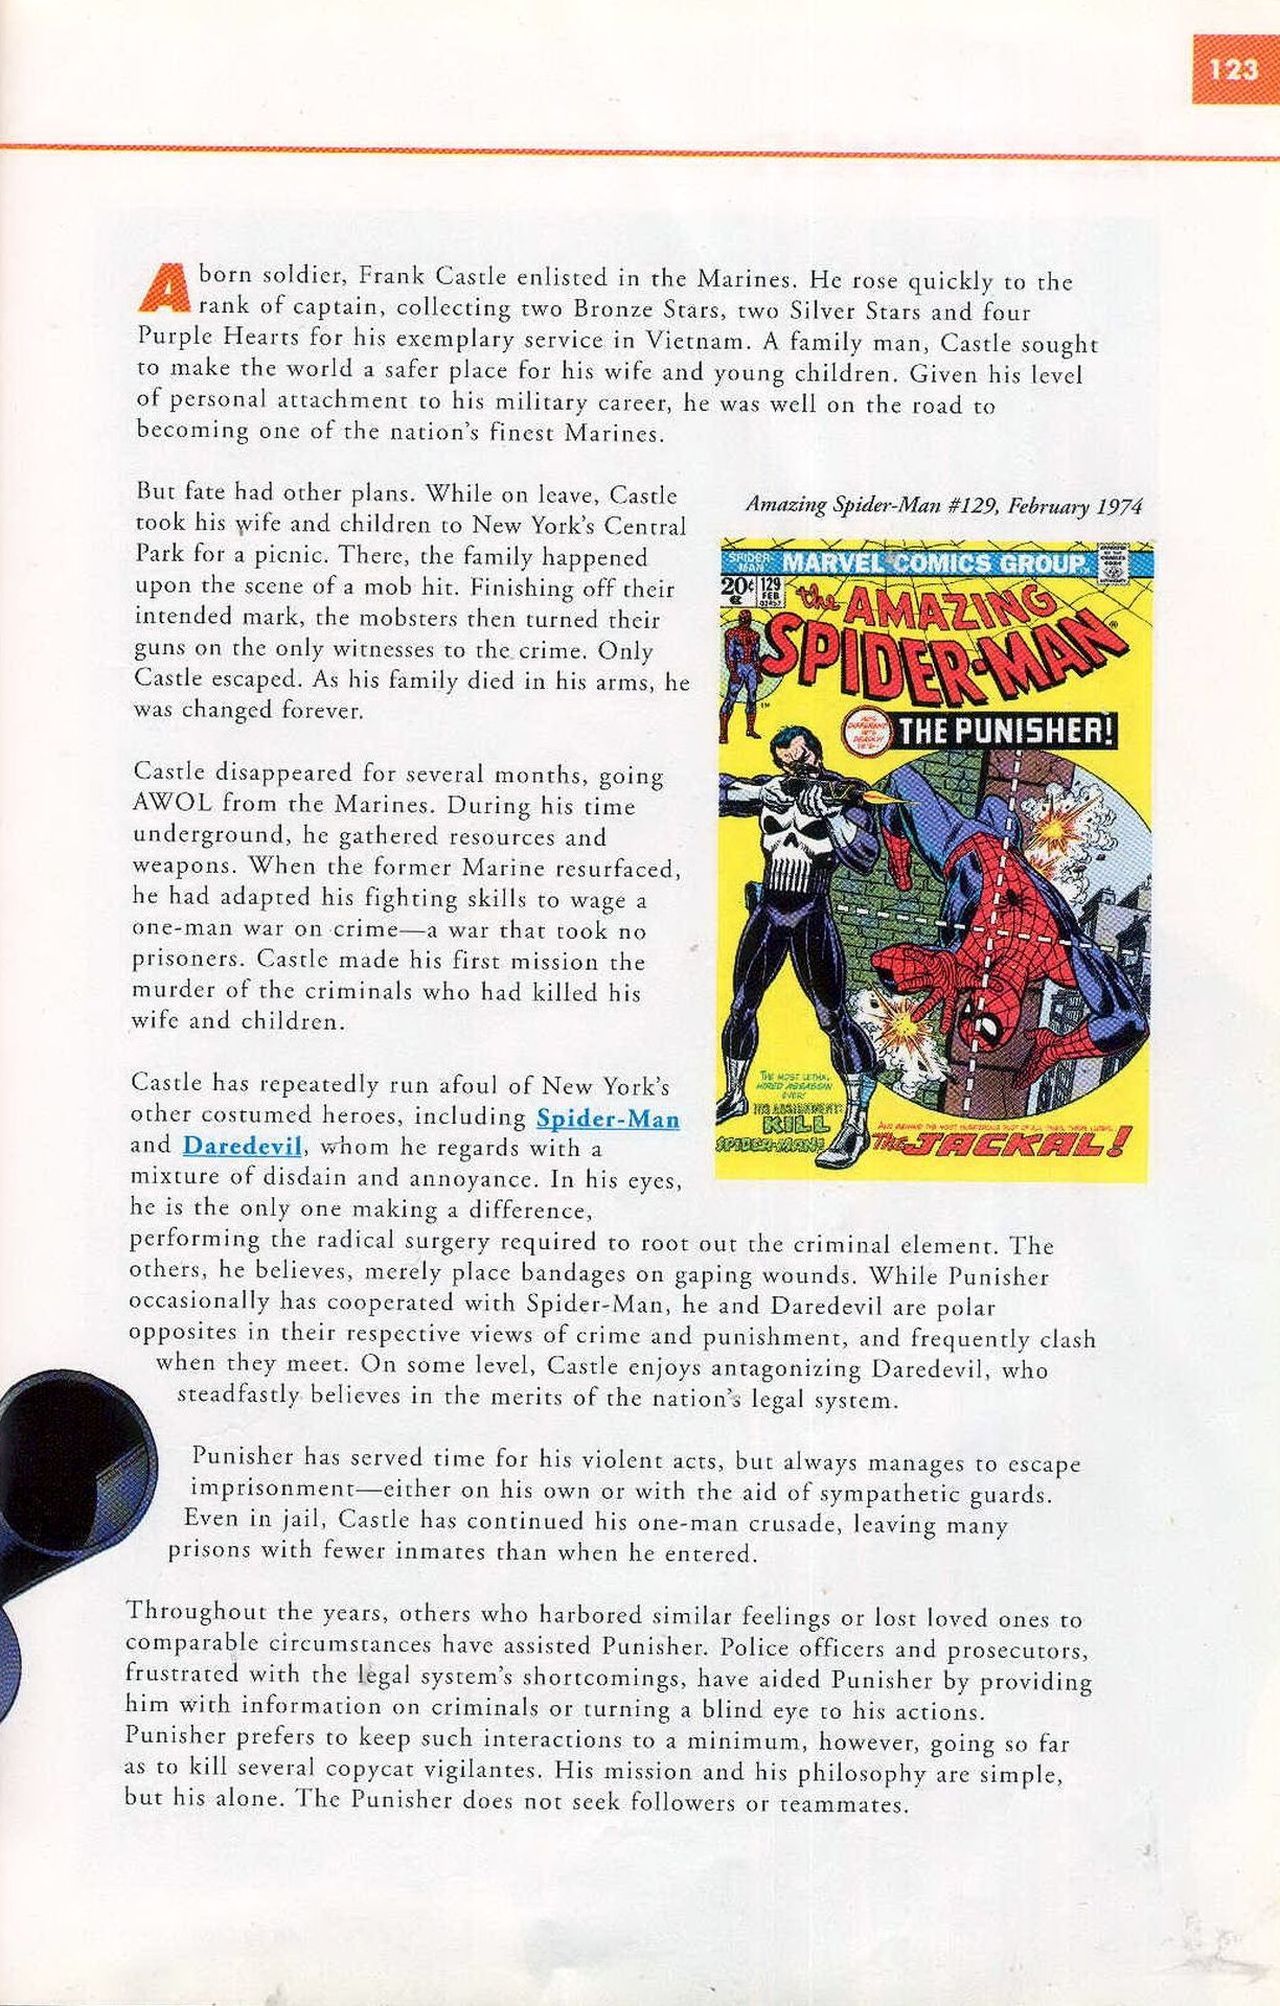 Read online Marvel Encyclopedia comic -  Issue # TPB 1 - 121